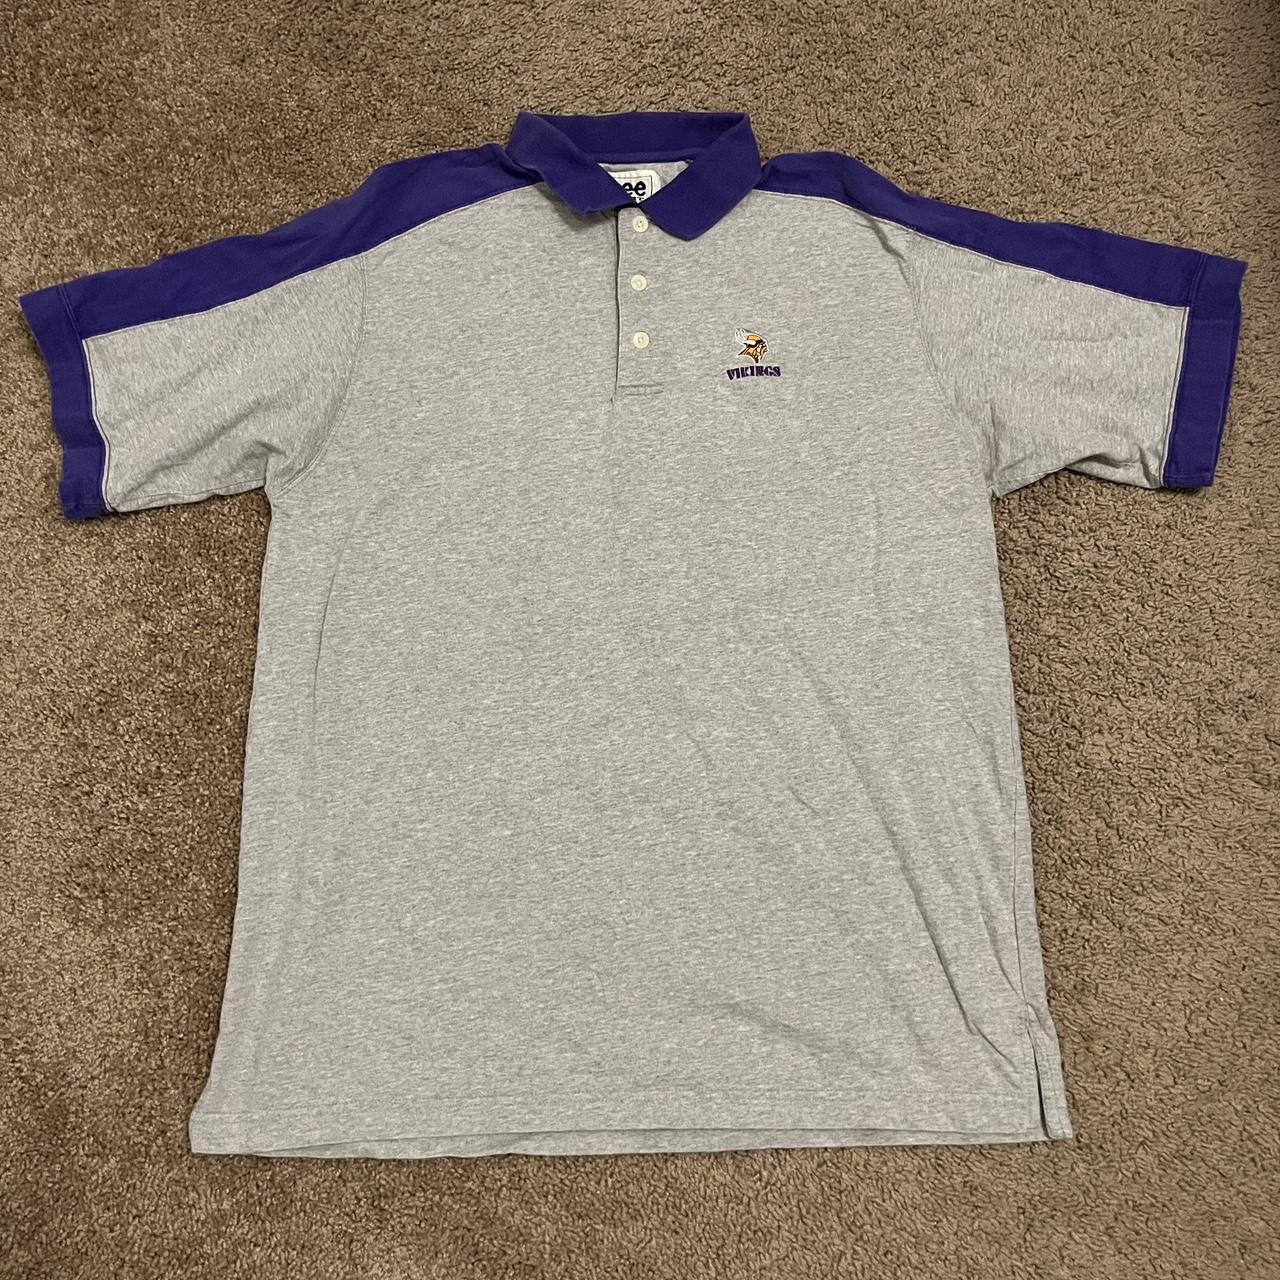 Vintage Lee Button Up Minnesota Vikings Shirt No - Depop